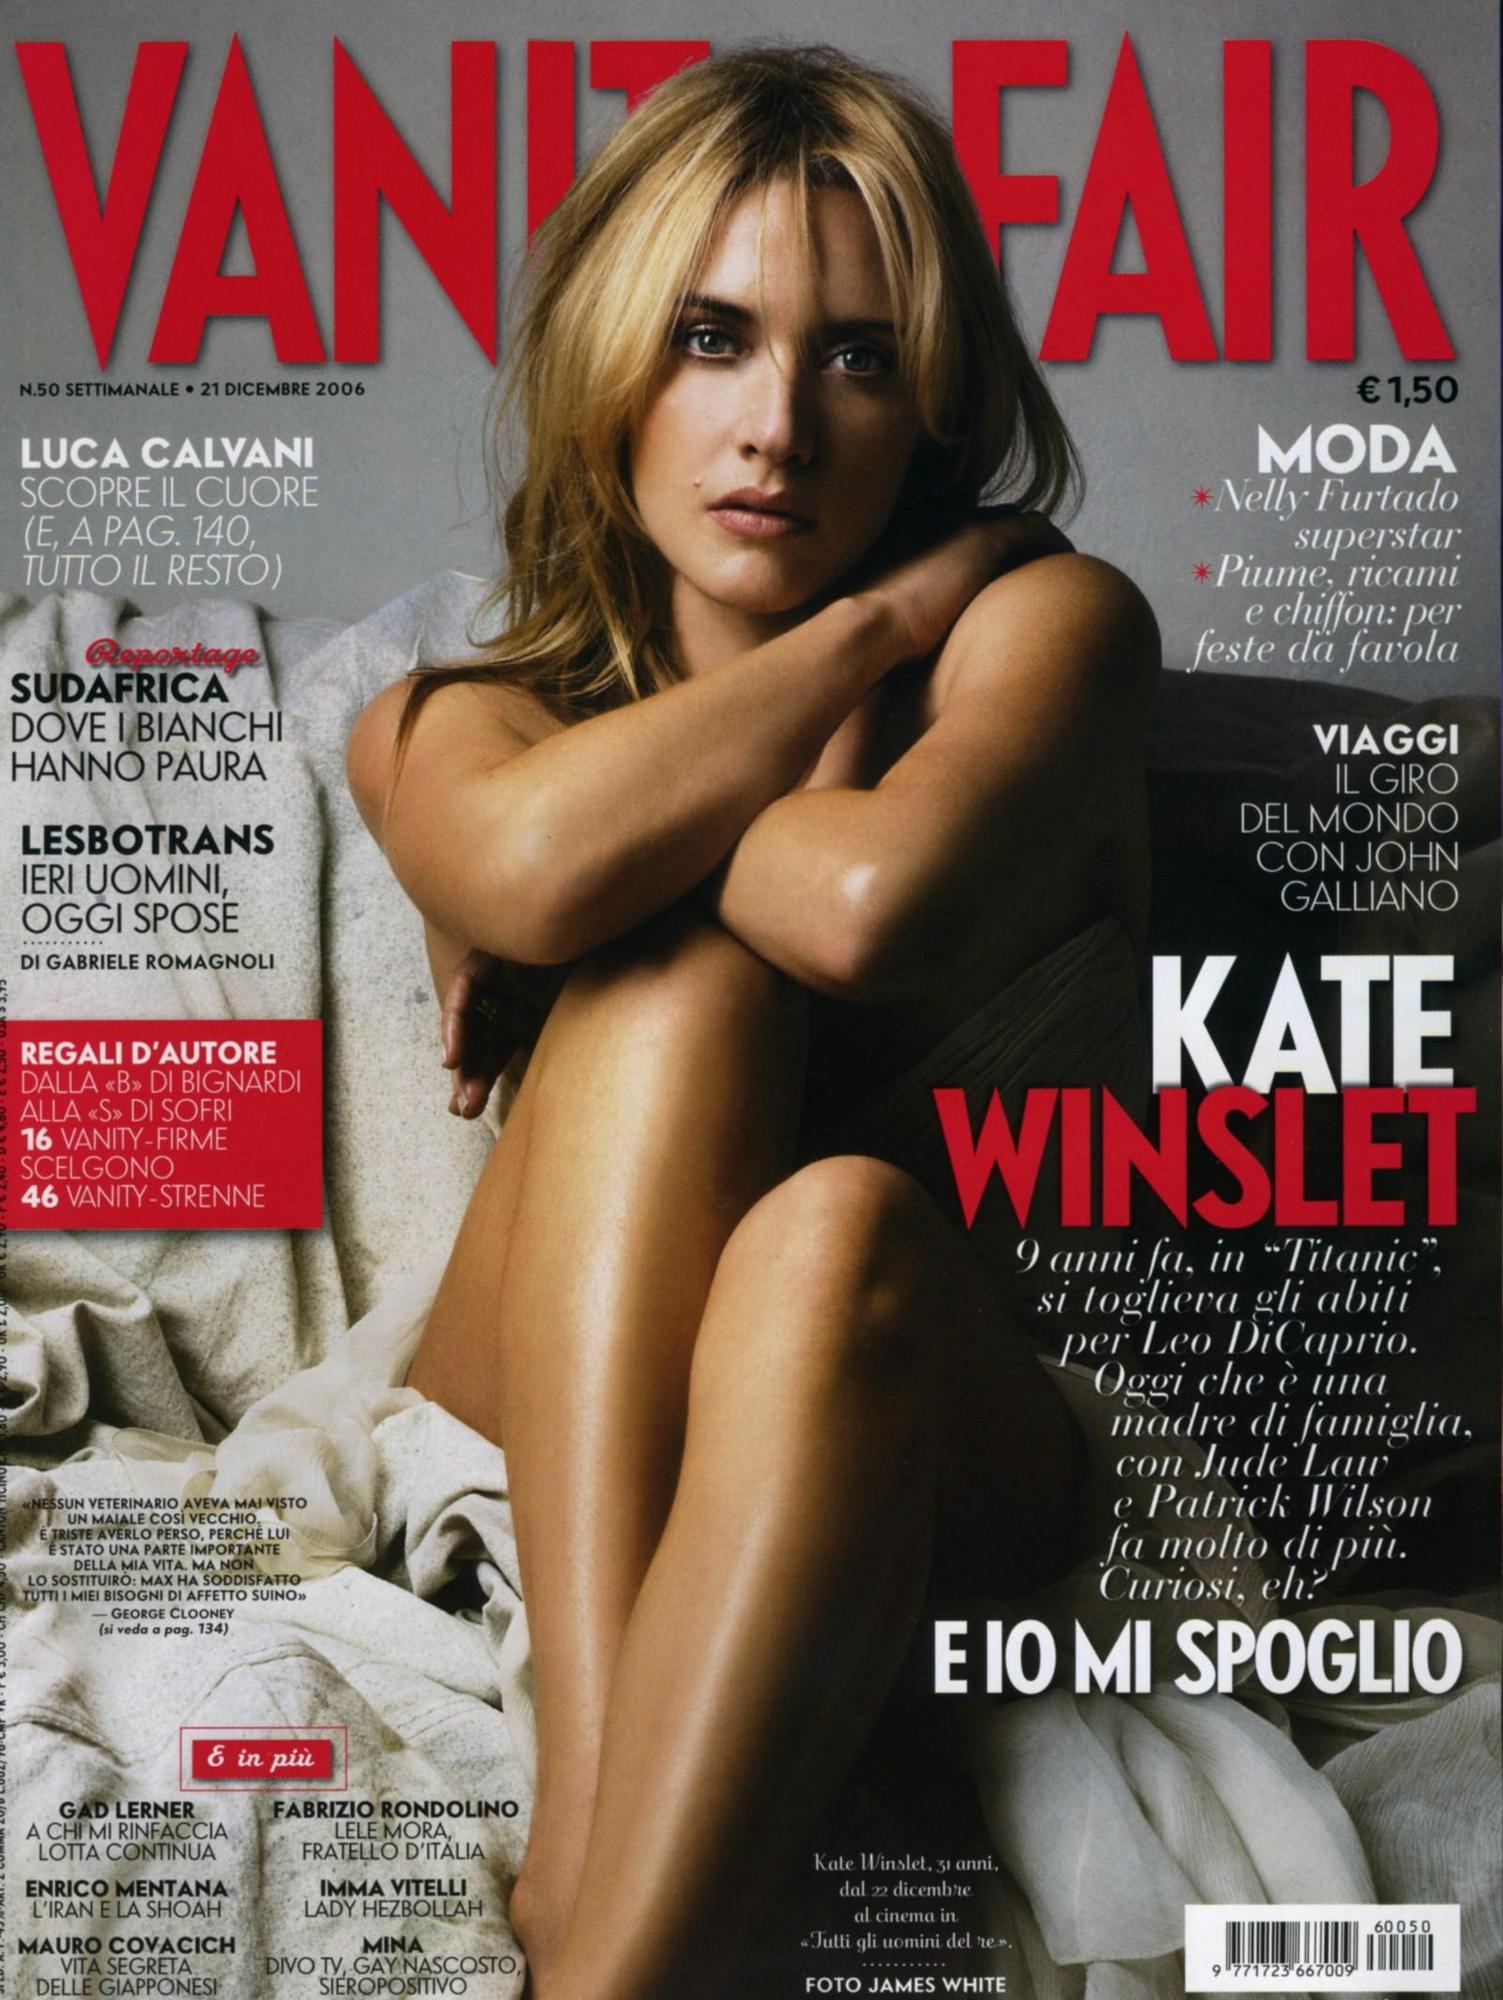 pludselig følelse Slapper af Dec: Vanity Fair Italy - vanity-fair-italy dec-21-06 001 - Kate Winslet Fan  | Photo Gallery | Your online resource for Kate Winslet since 2004